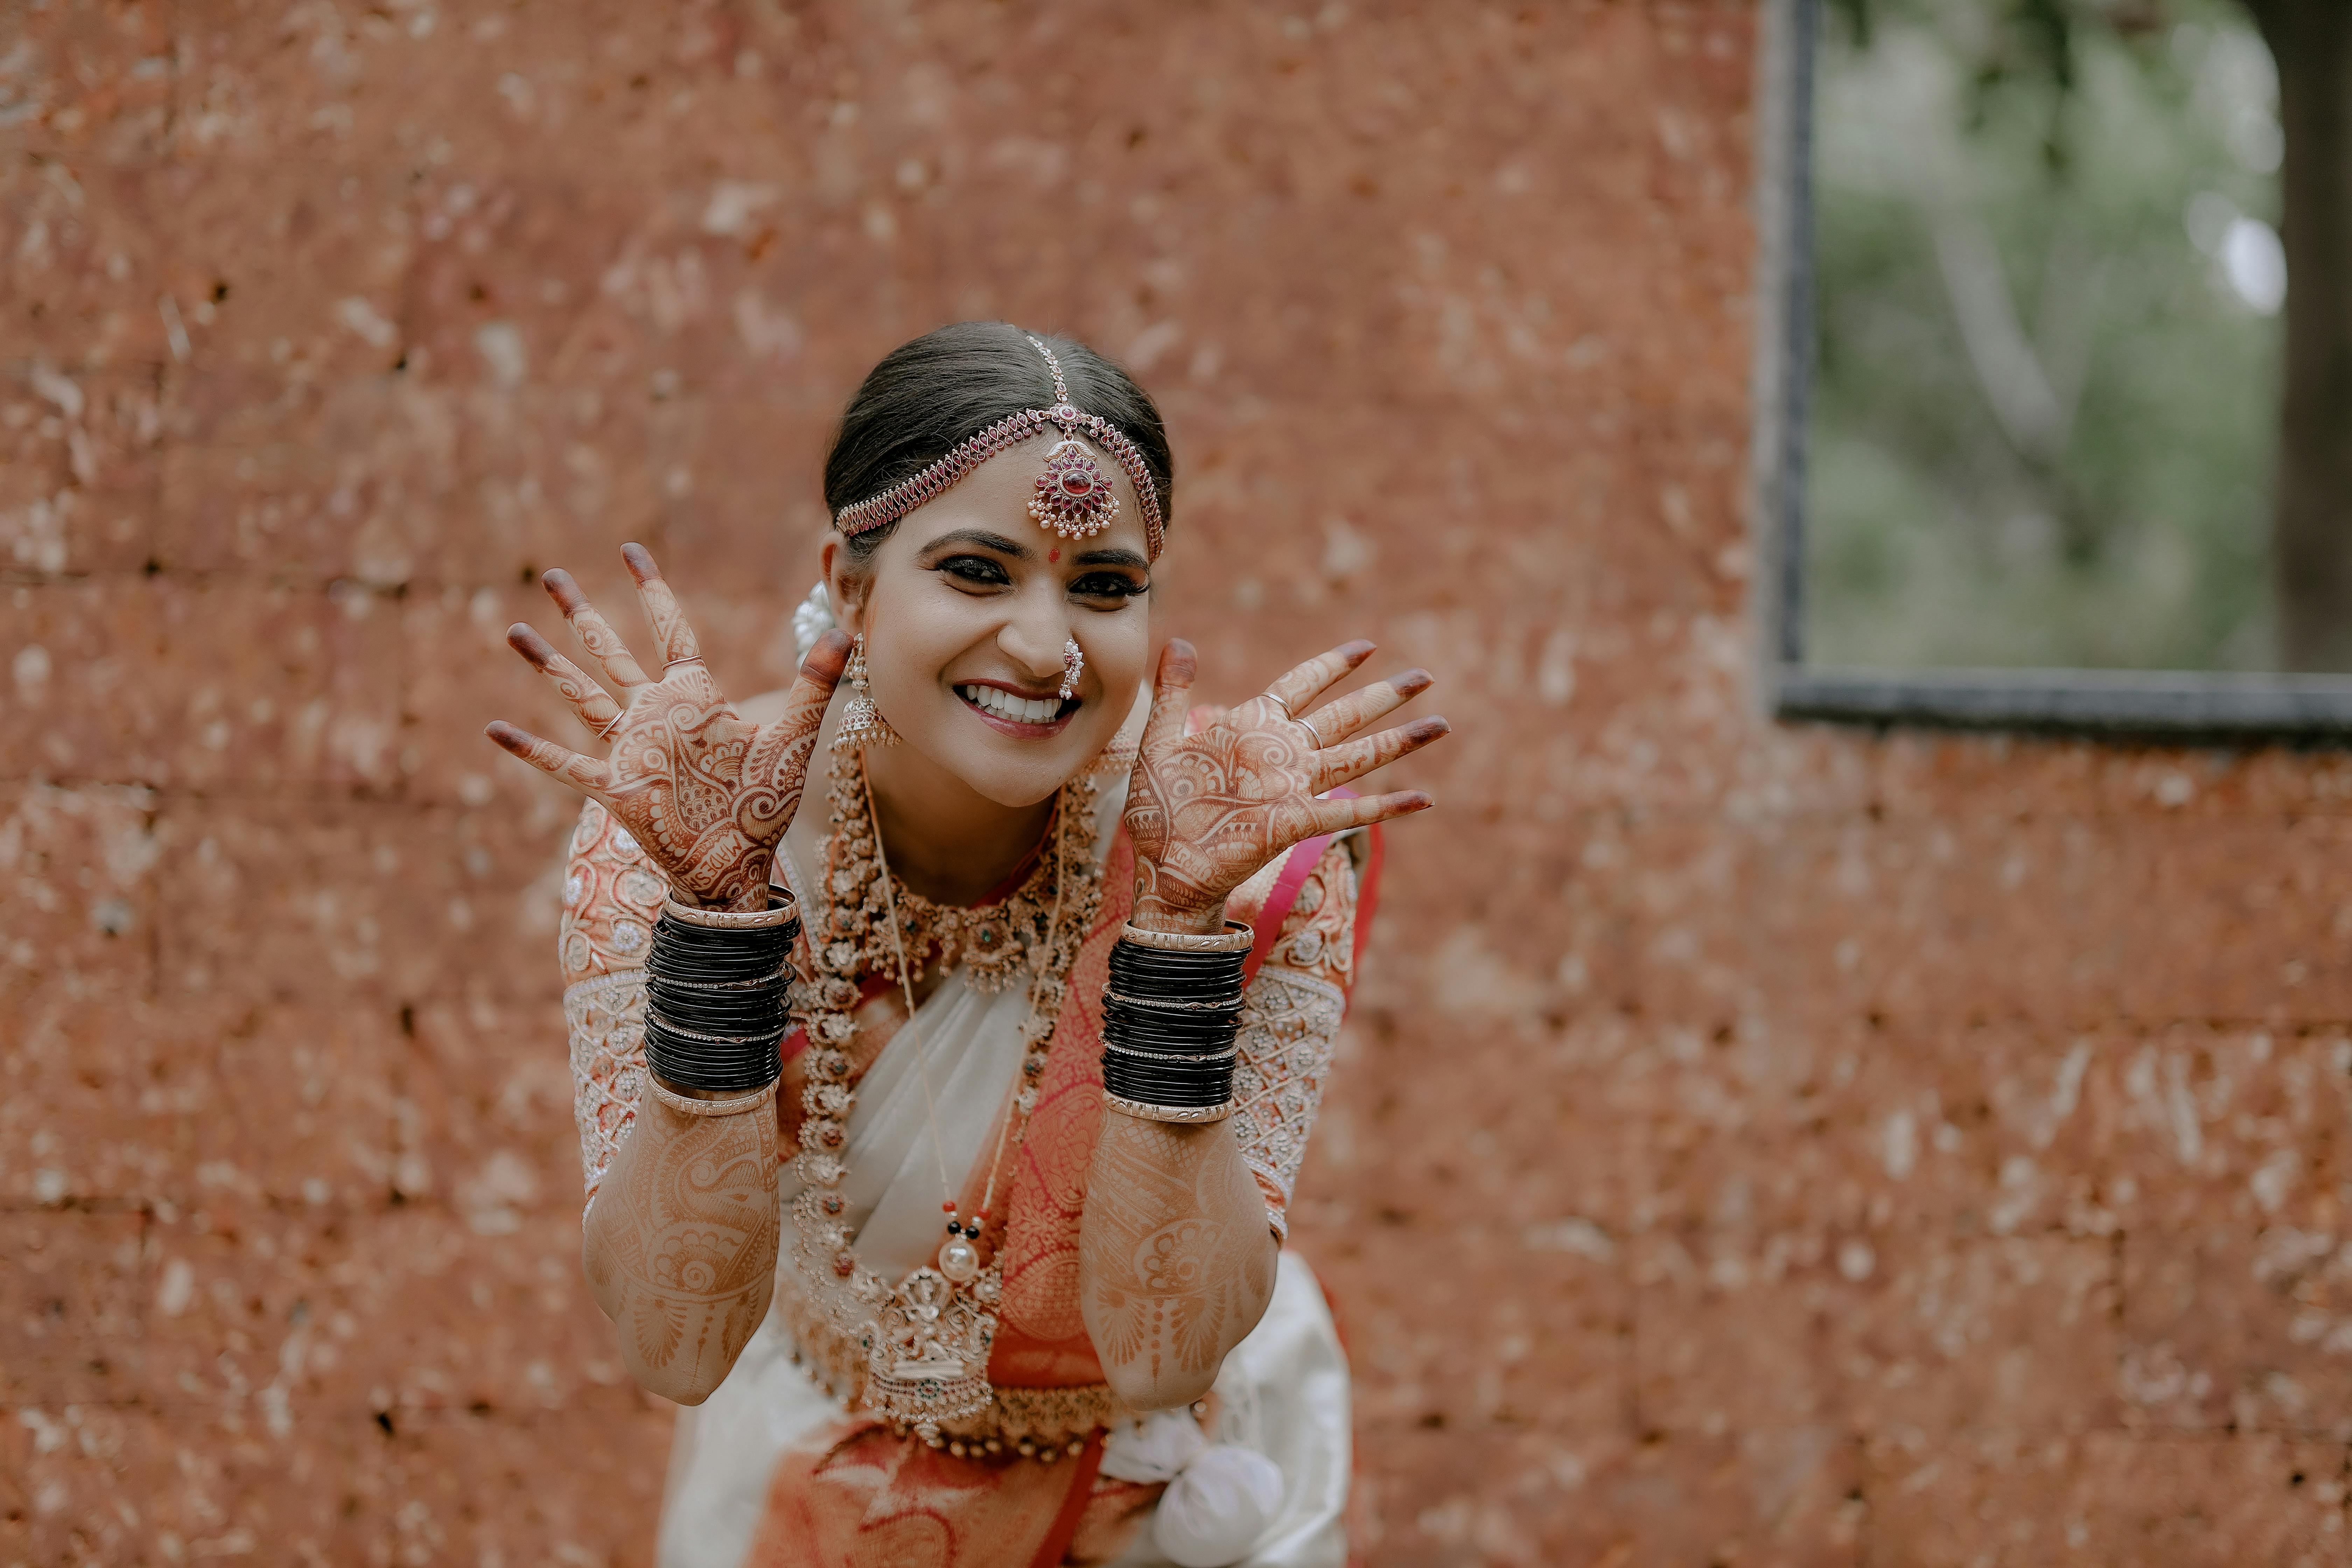 Pin by syamanoj on kerala bride | Indian wedding photography couples, Bride  photography poses, Indian wedding photography